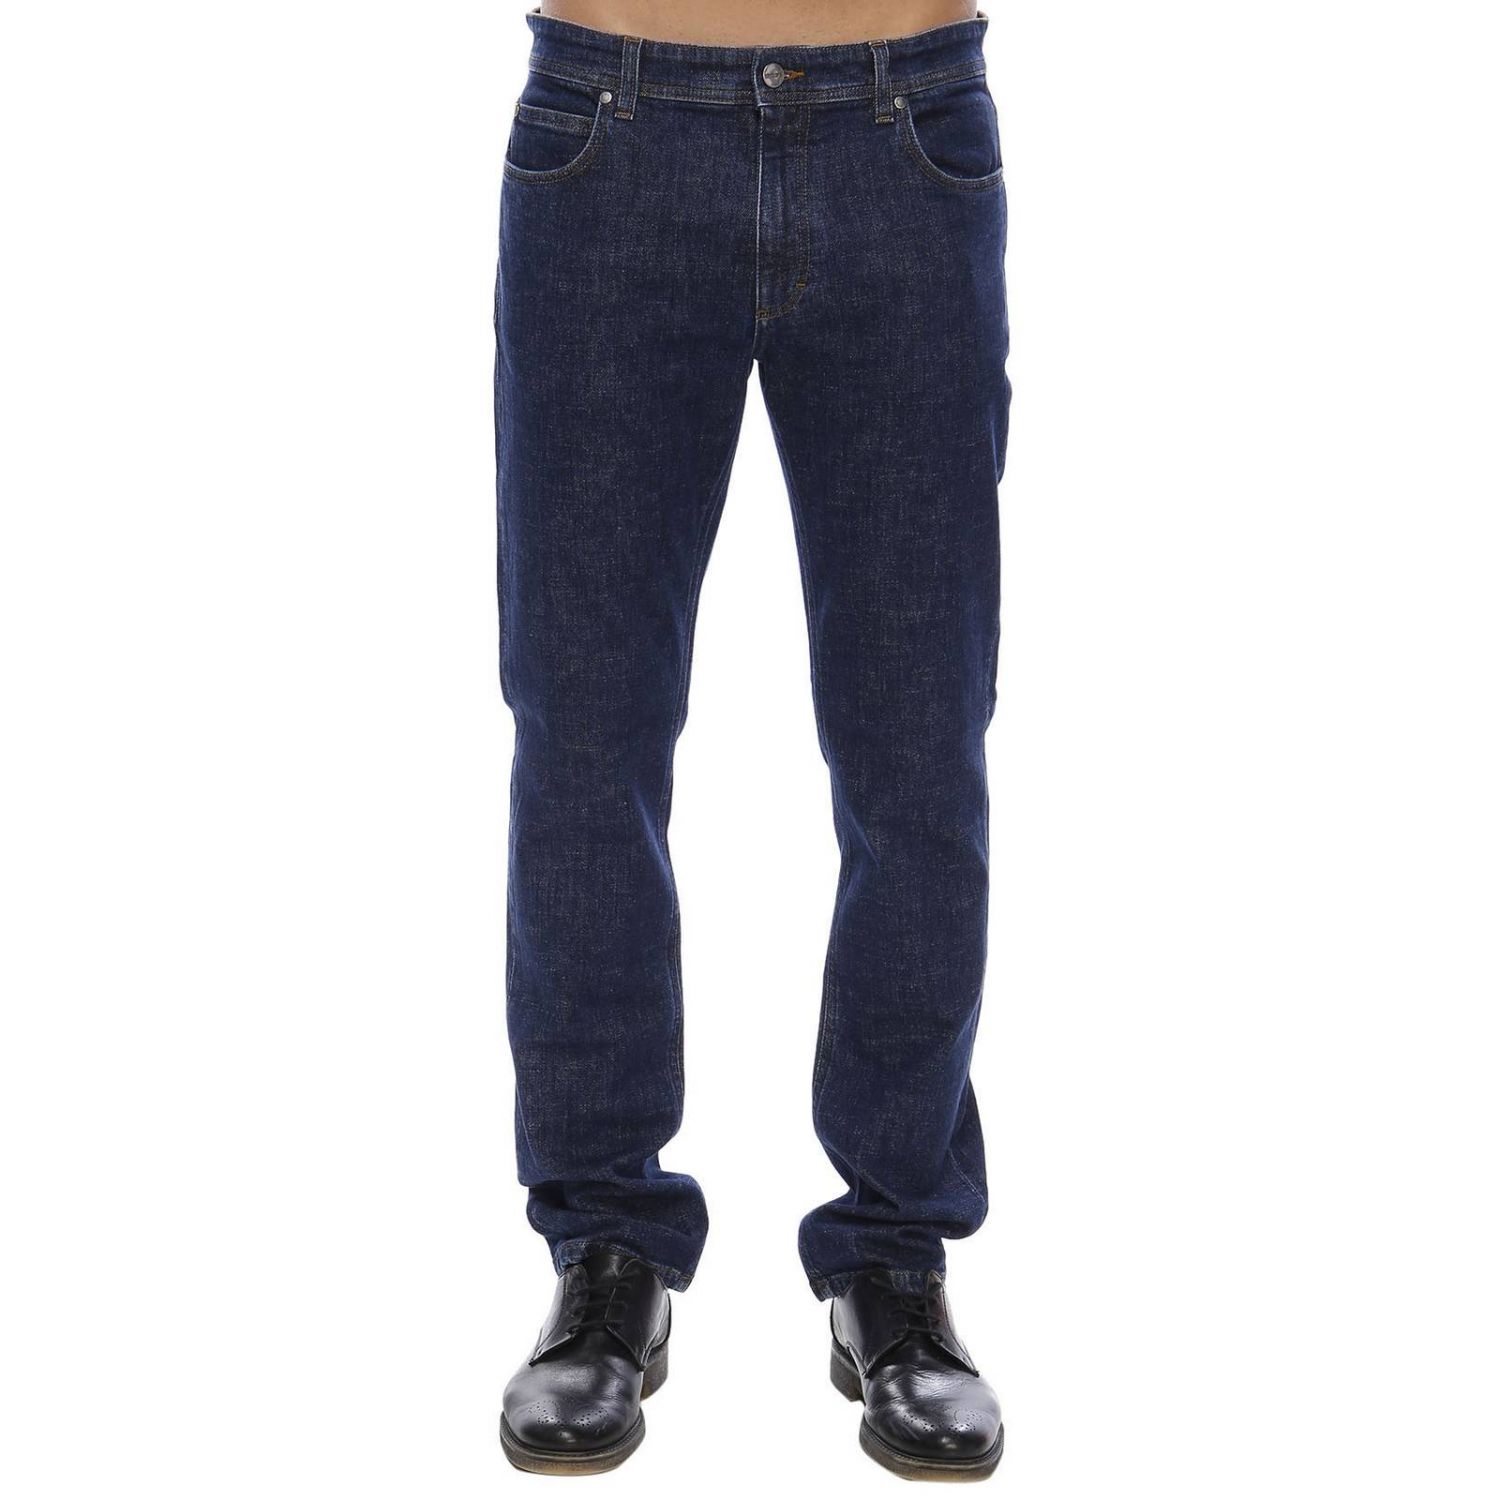 Roberto Cavalli Outlet: Jeans men - Denim | Jeans Roberto Cavalli ...